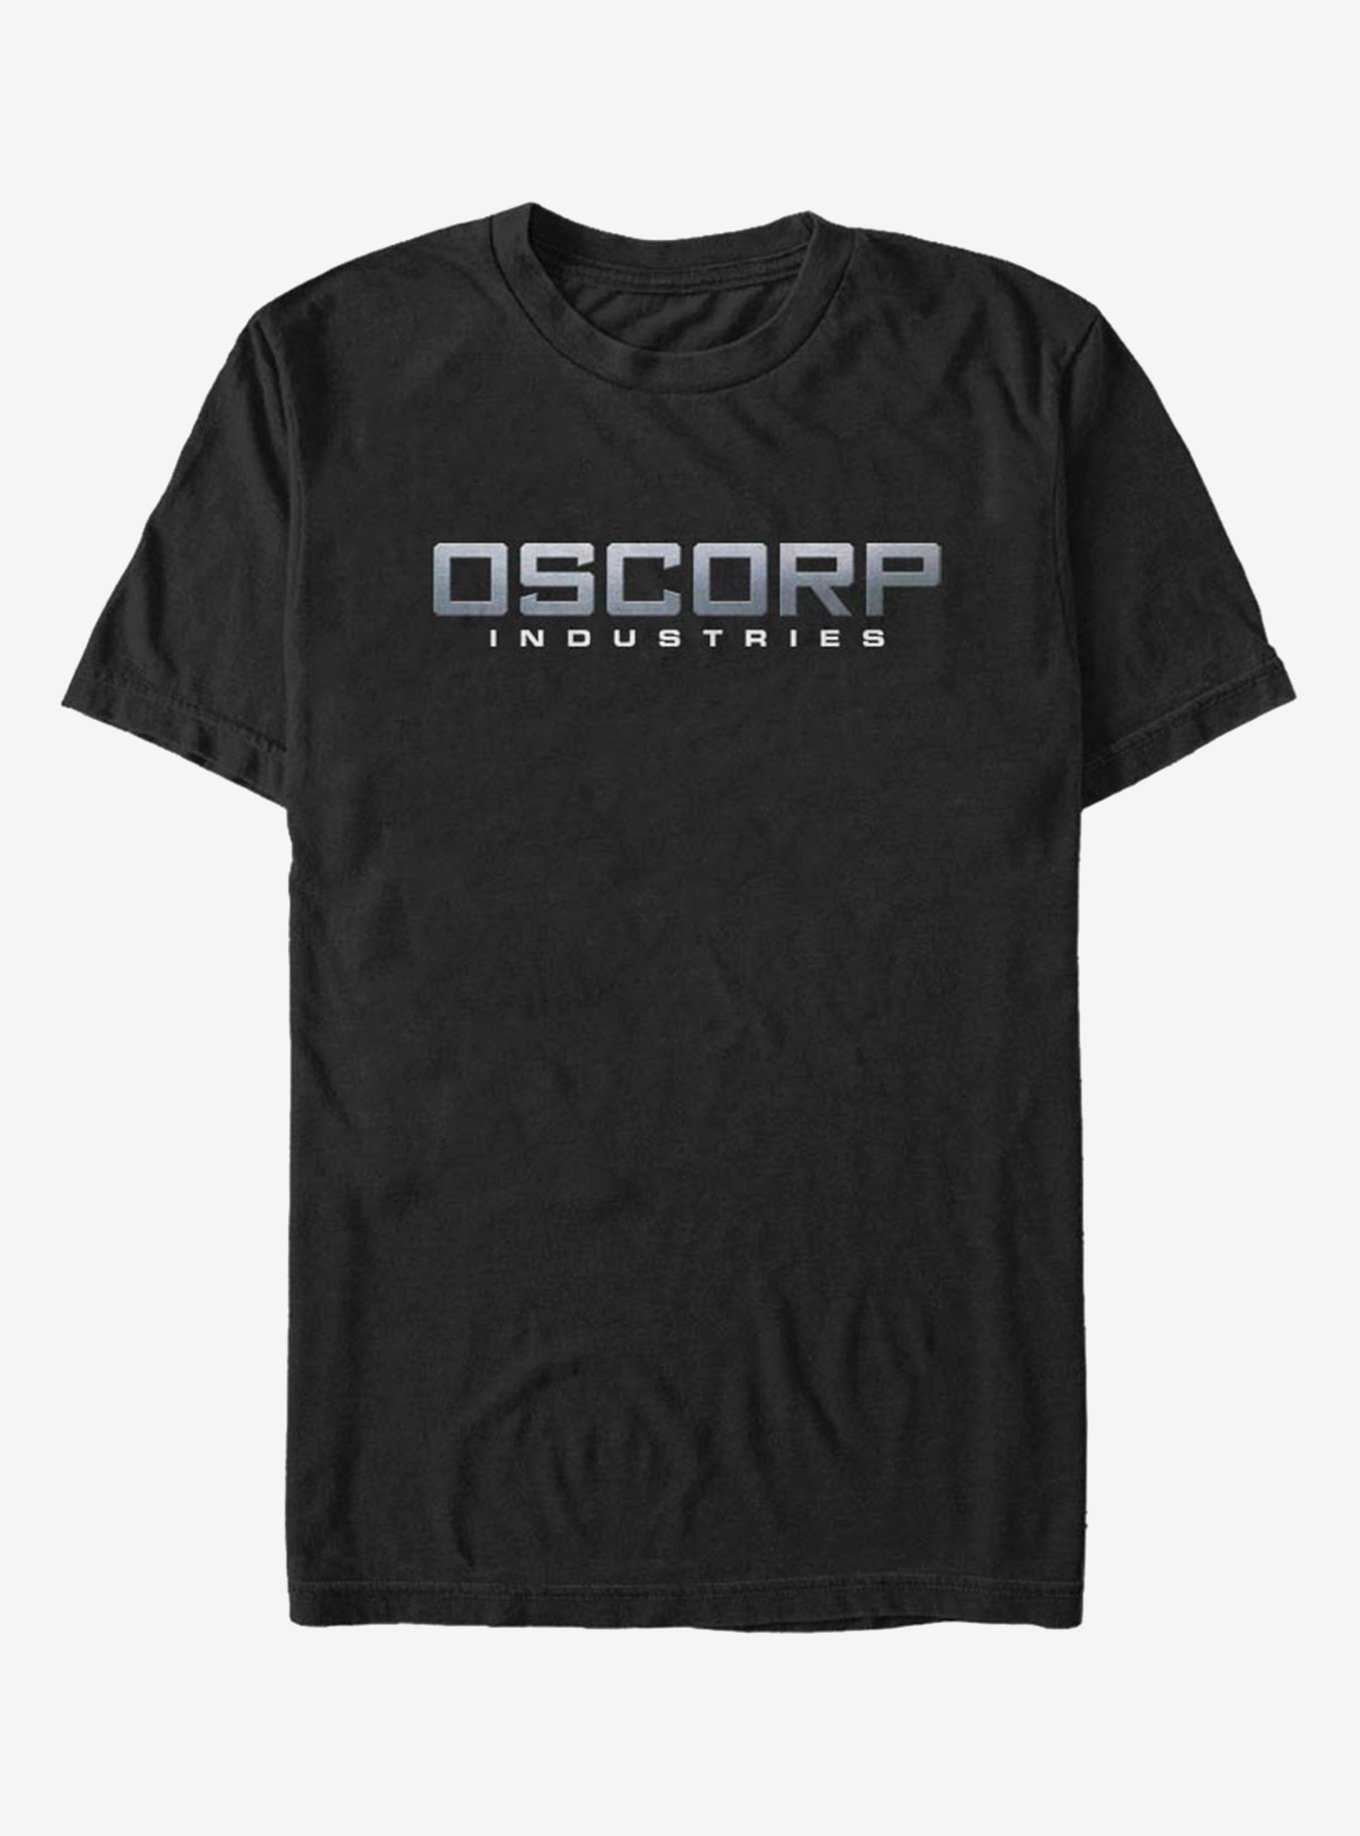 Marvel Spider-Man Oscorp Logo T-Shirt, , hi-res